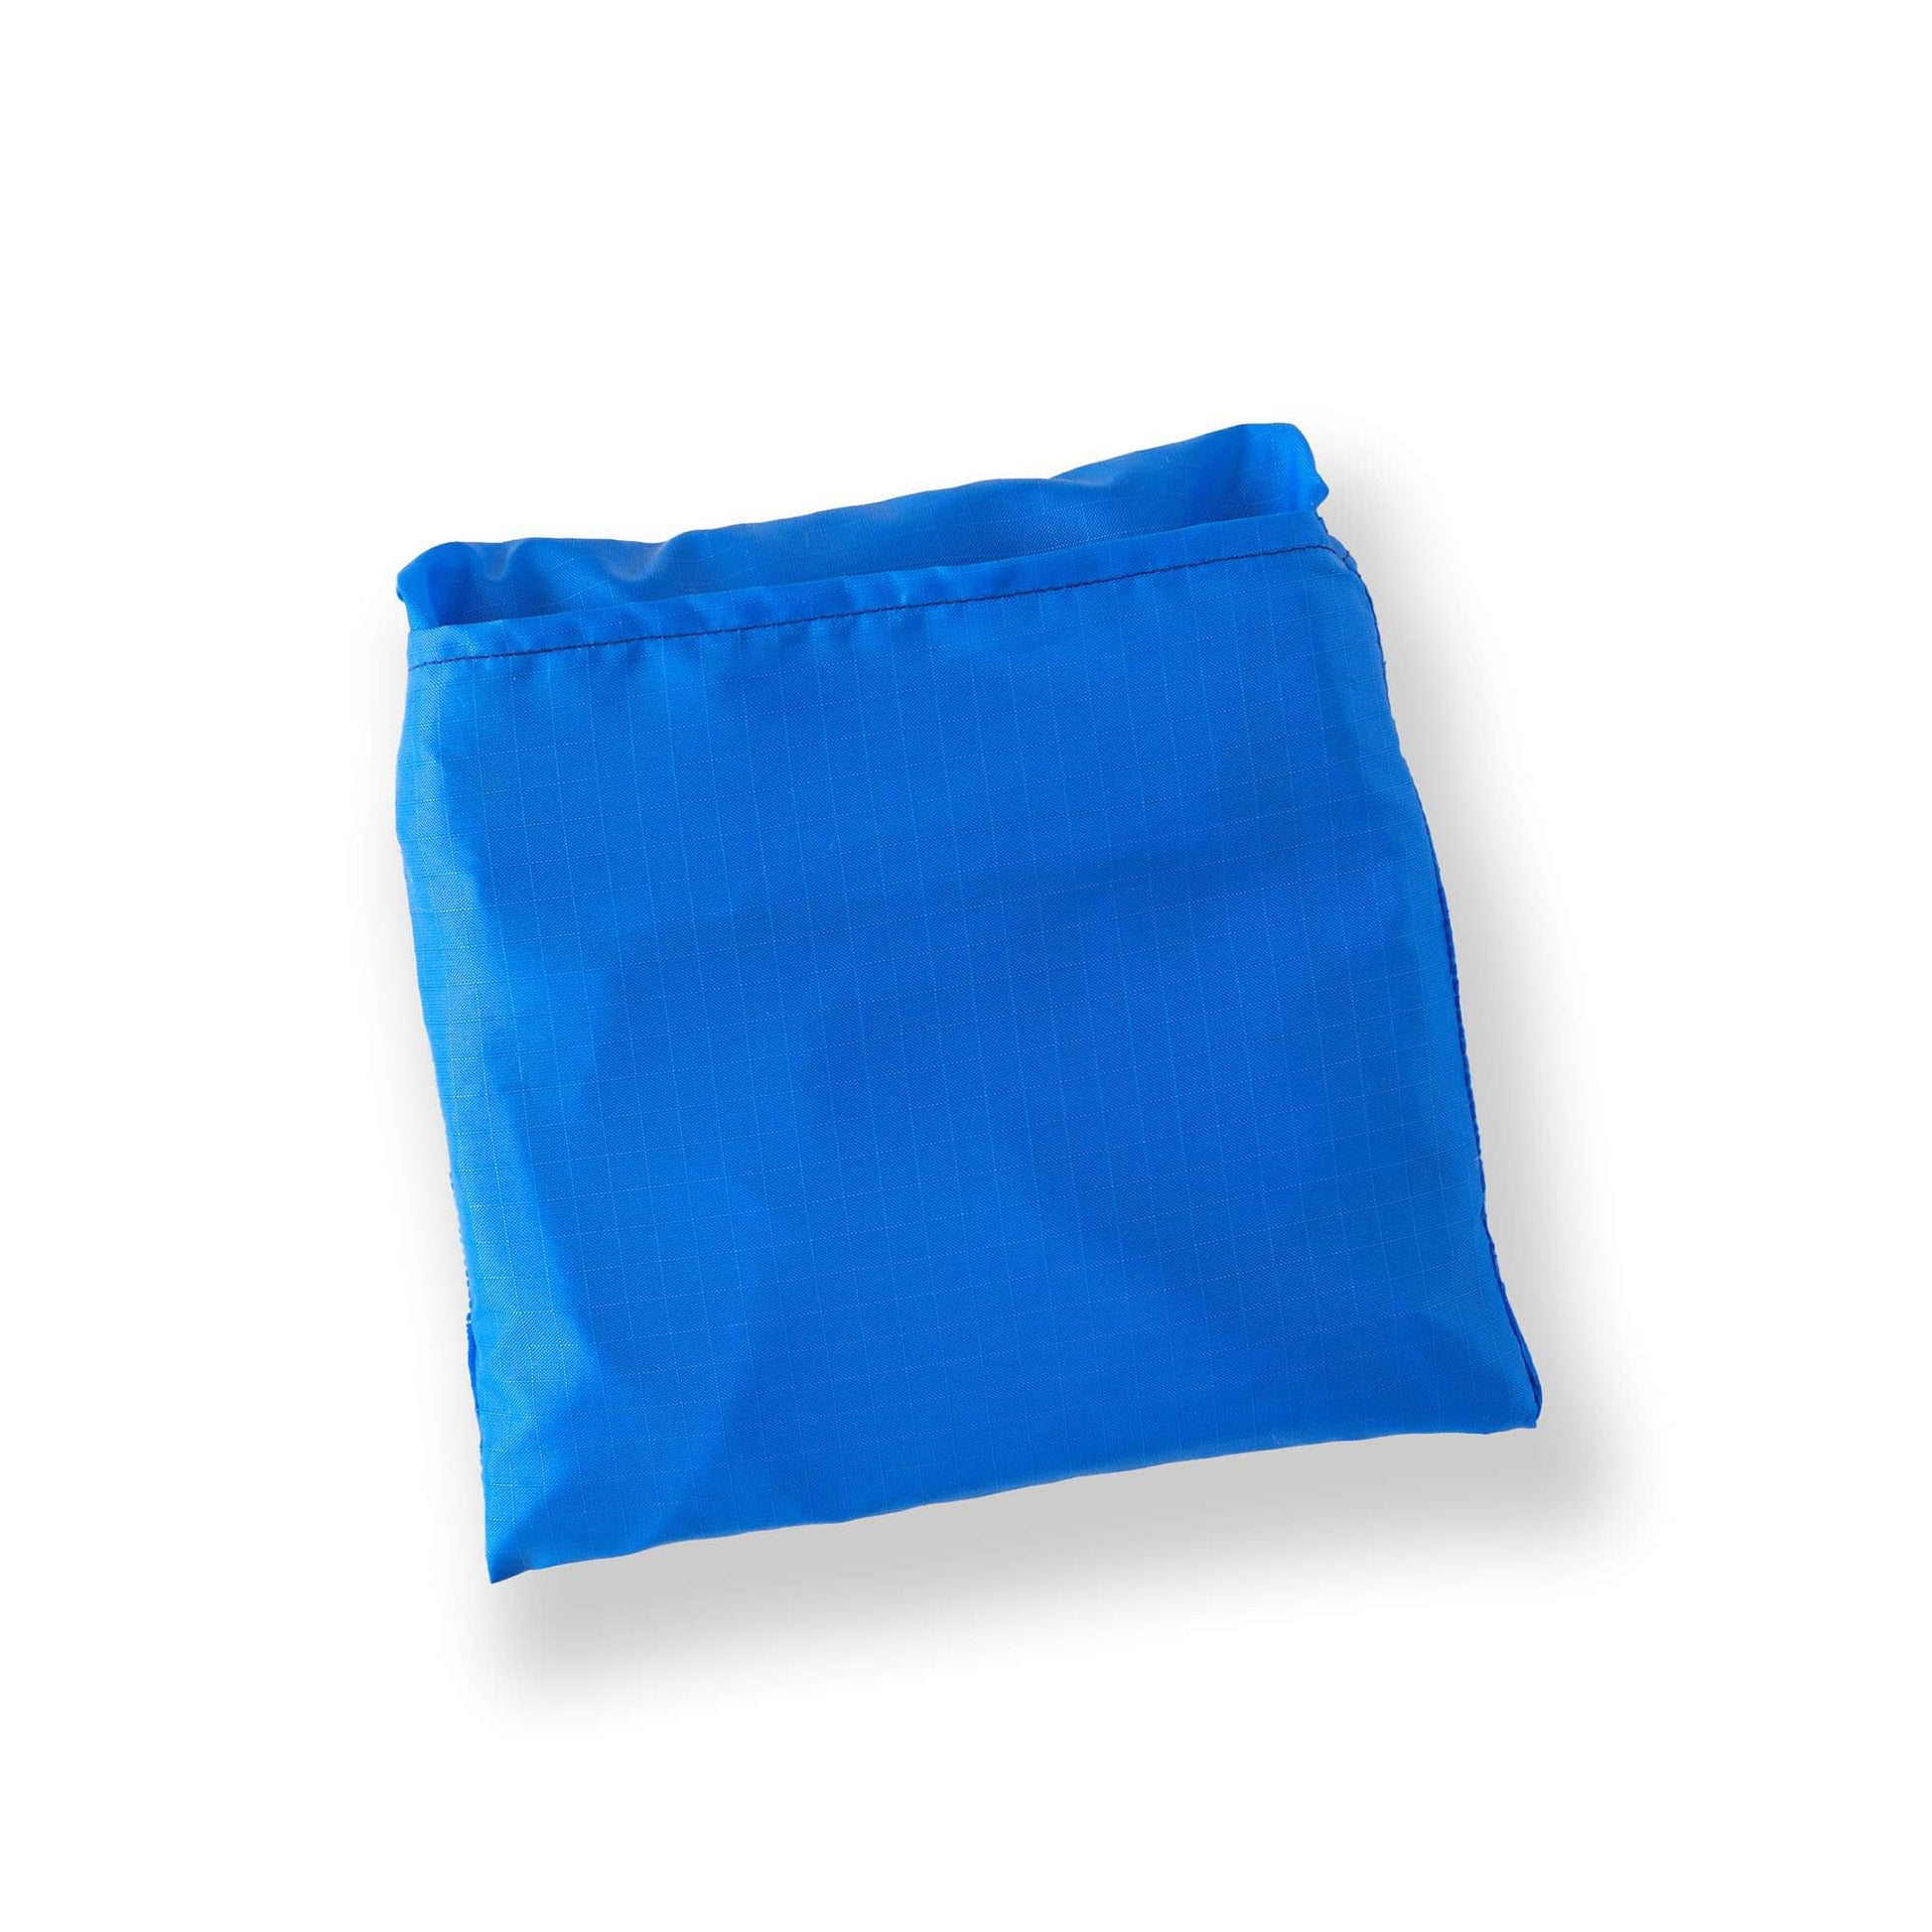 Free Coats & Clark Convertible Fold'n Go Bag Sewing Pattern